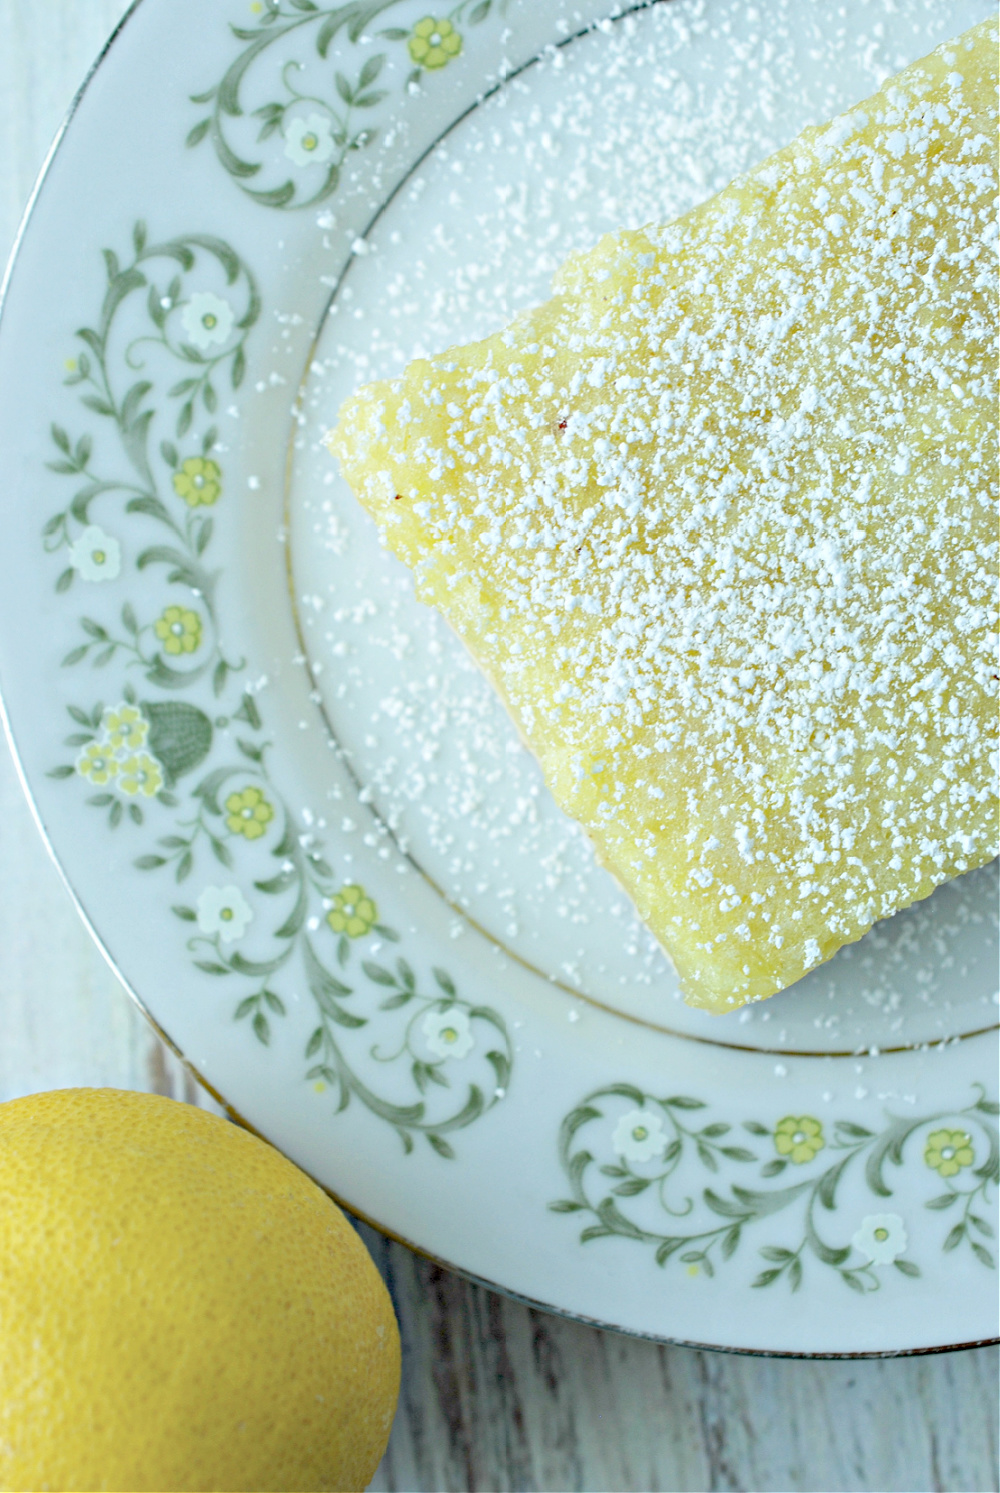 Easy Sweet and Tangy Lemon Bars Recipe